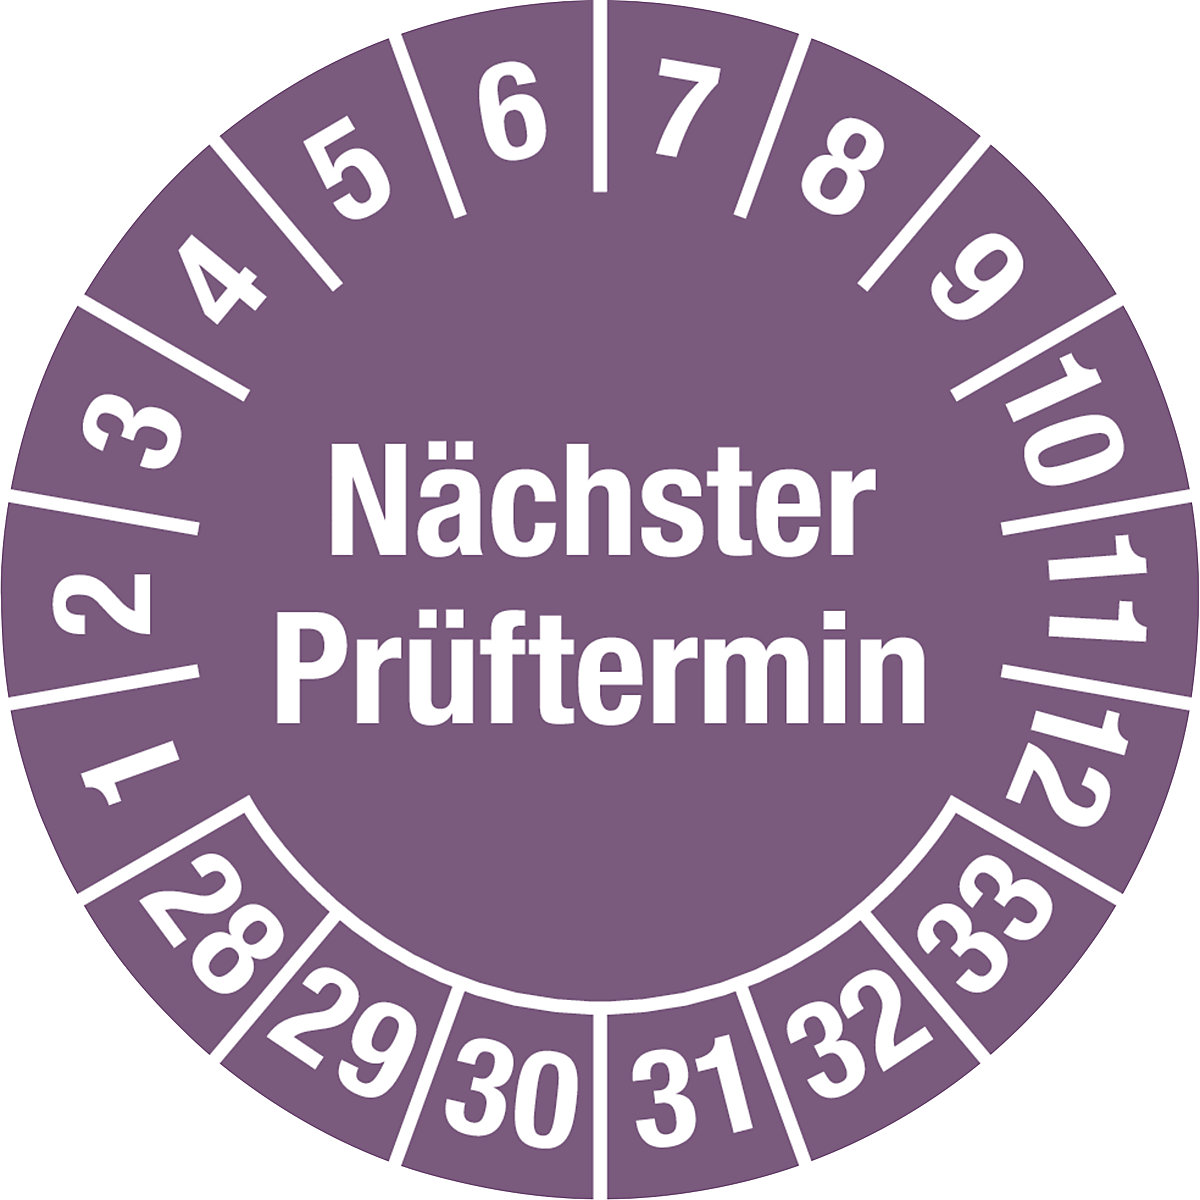 Nächster Prüftermin, Mehrjahreszahlen, Dokumentenfolie, Ø 25 mm, VE 10 Stk, 28 – 33, violett-3